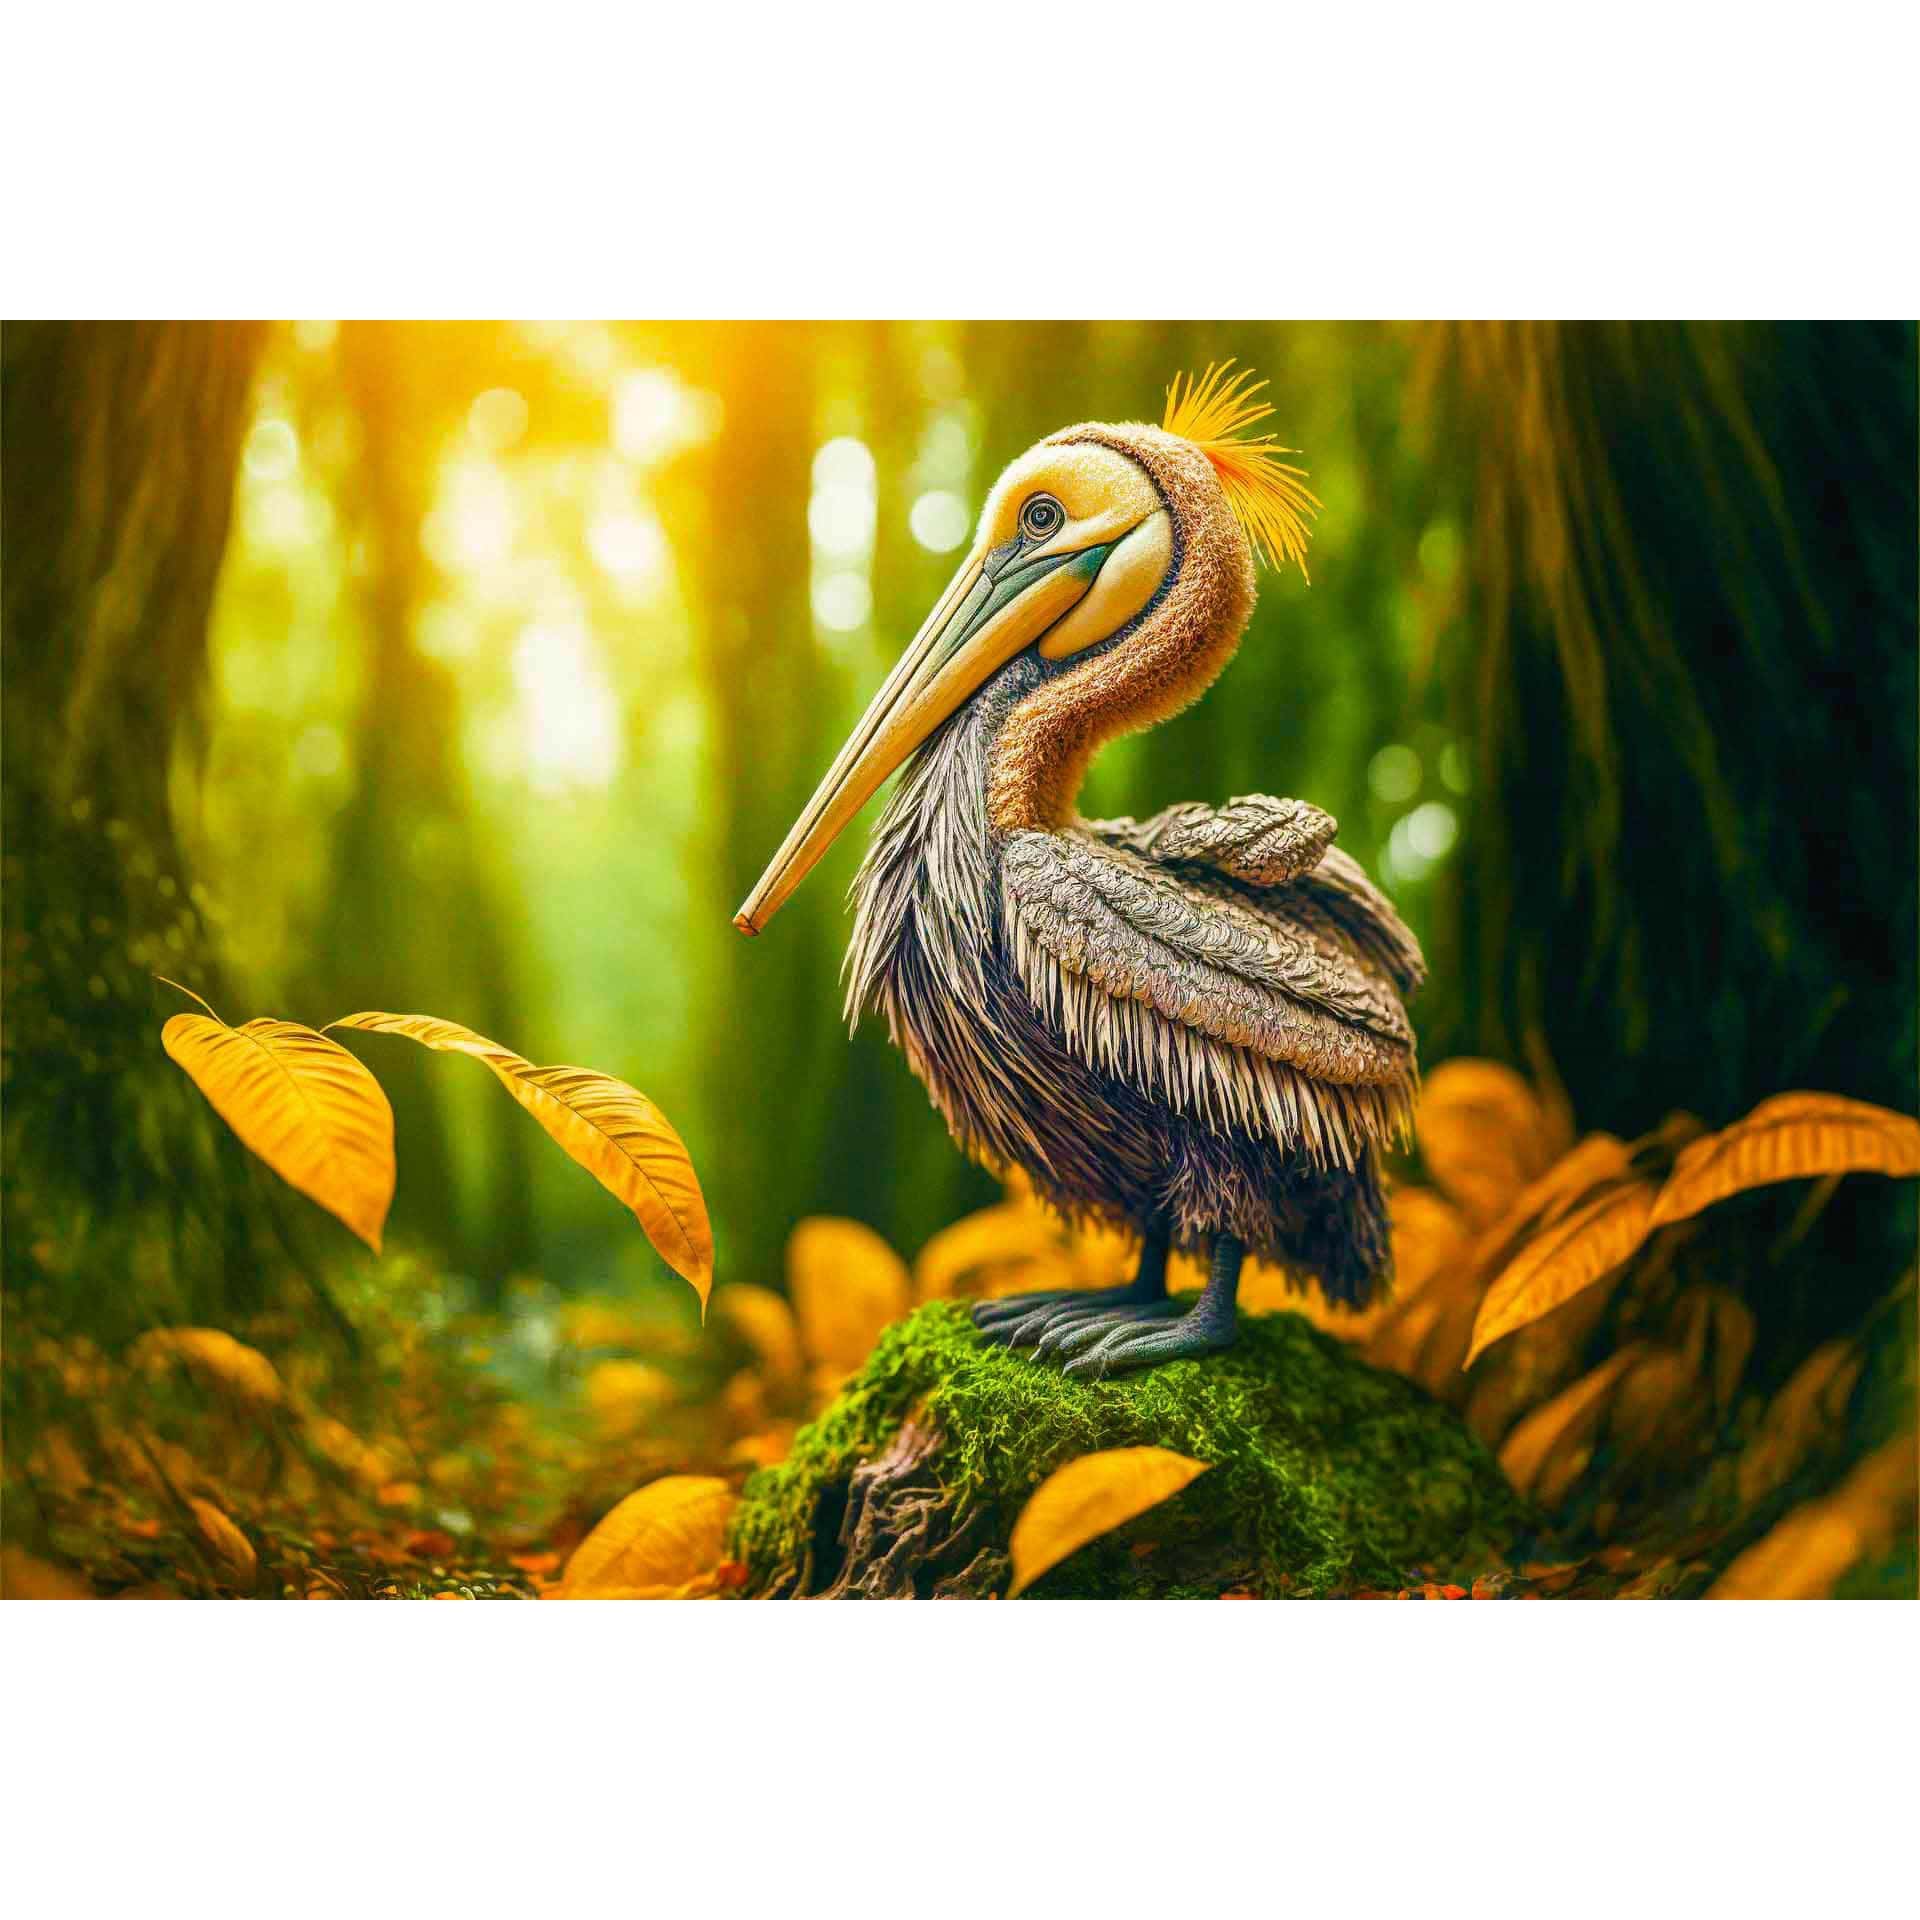 Diamond Painting - Pelikan im Wald - gedruckt in Ultra-HD - Horizontal, Pelikan, Tiere, Vögel